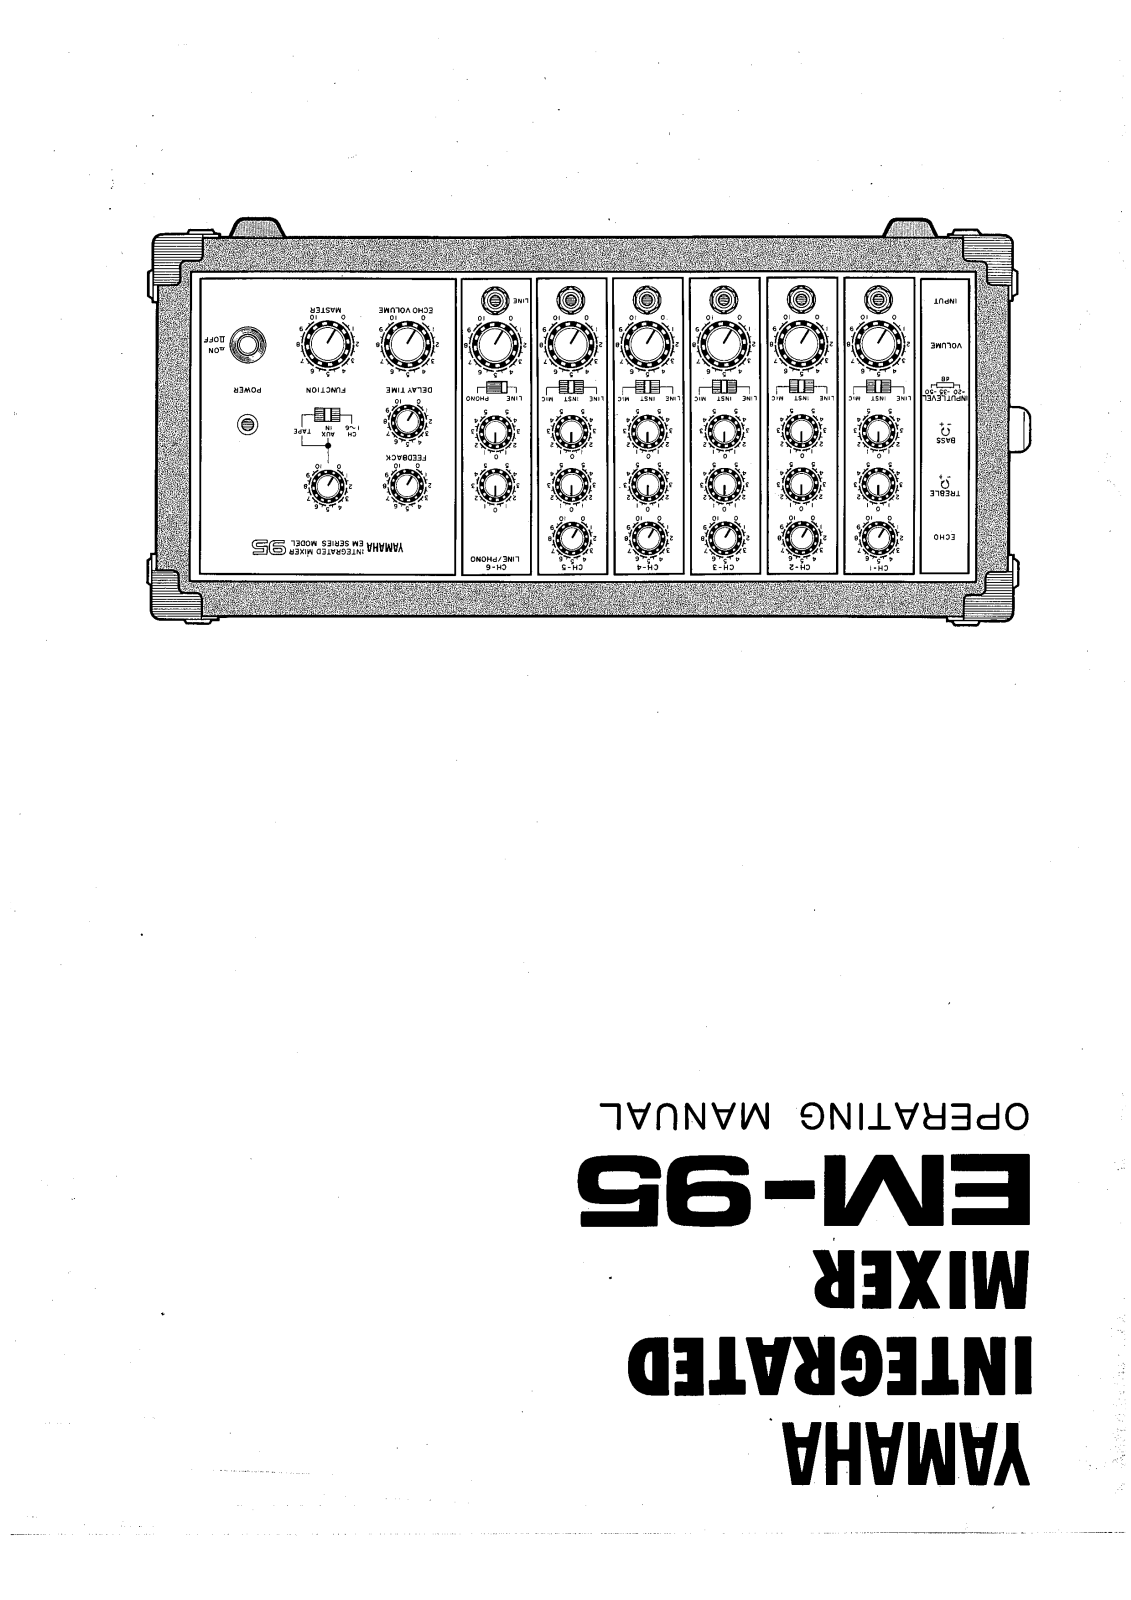 Yamaha Audio EM-95 User Manual